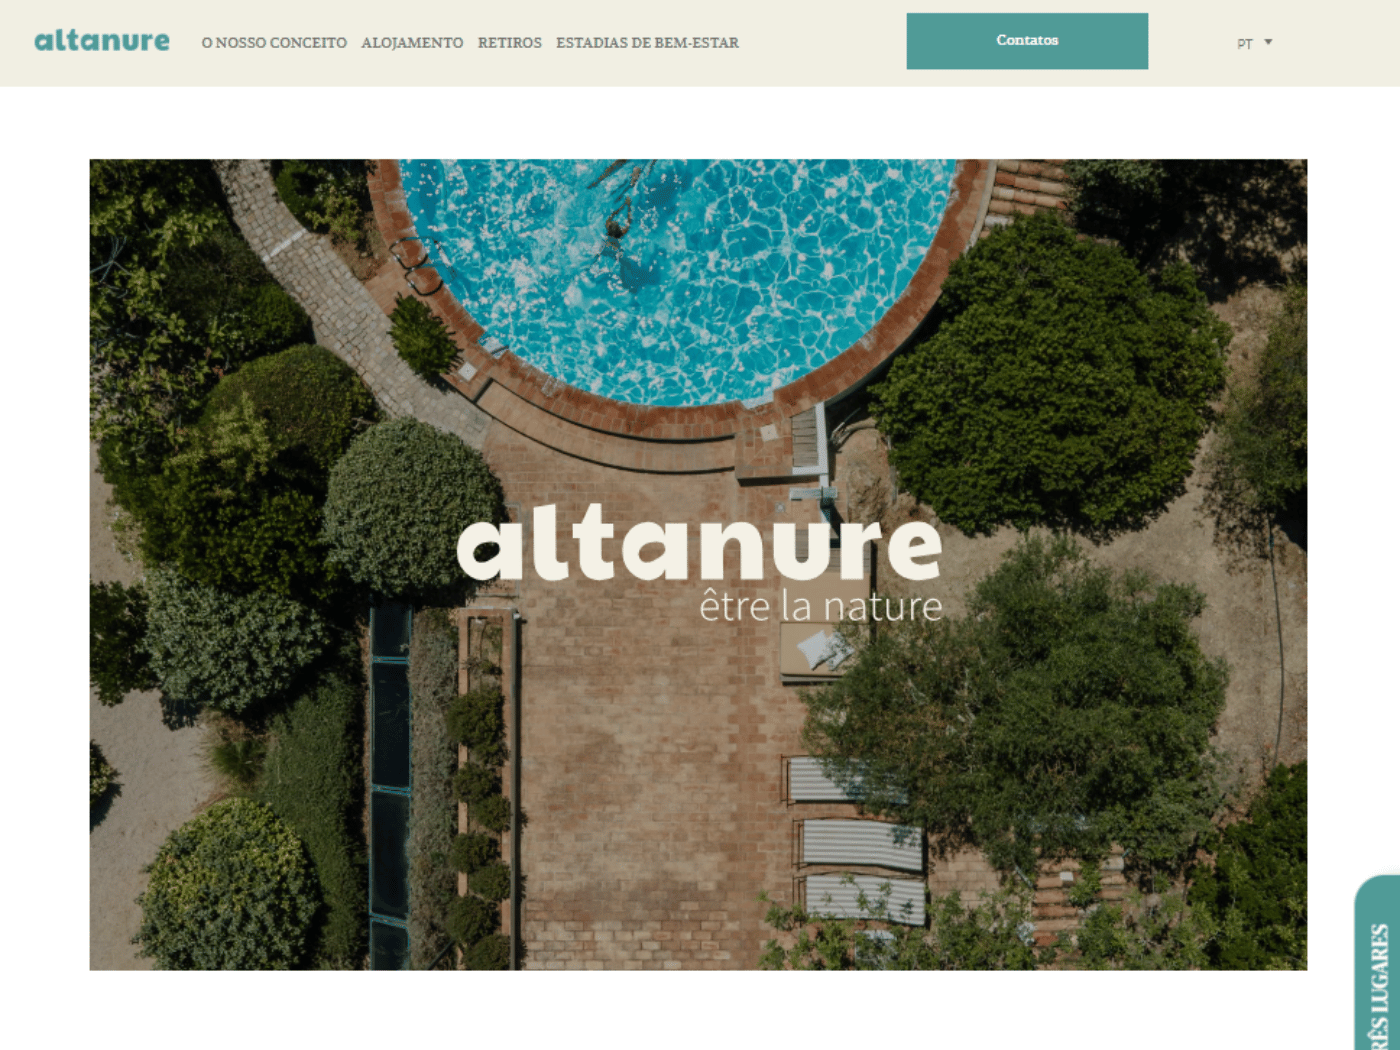 Altanure - être la nature sites gallery CSS design awards